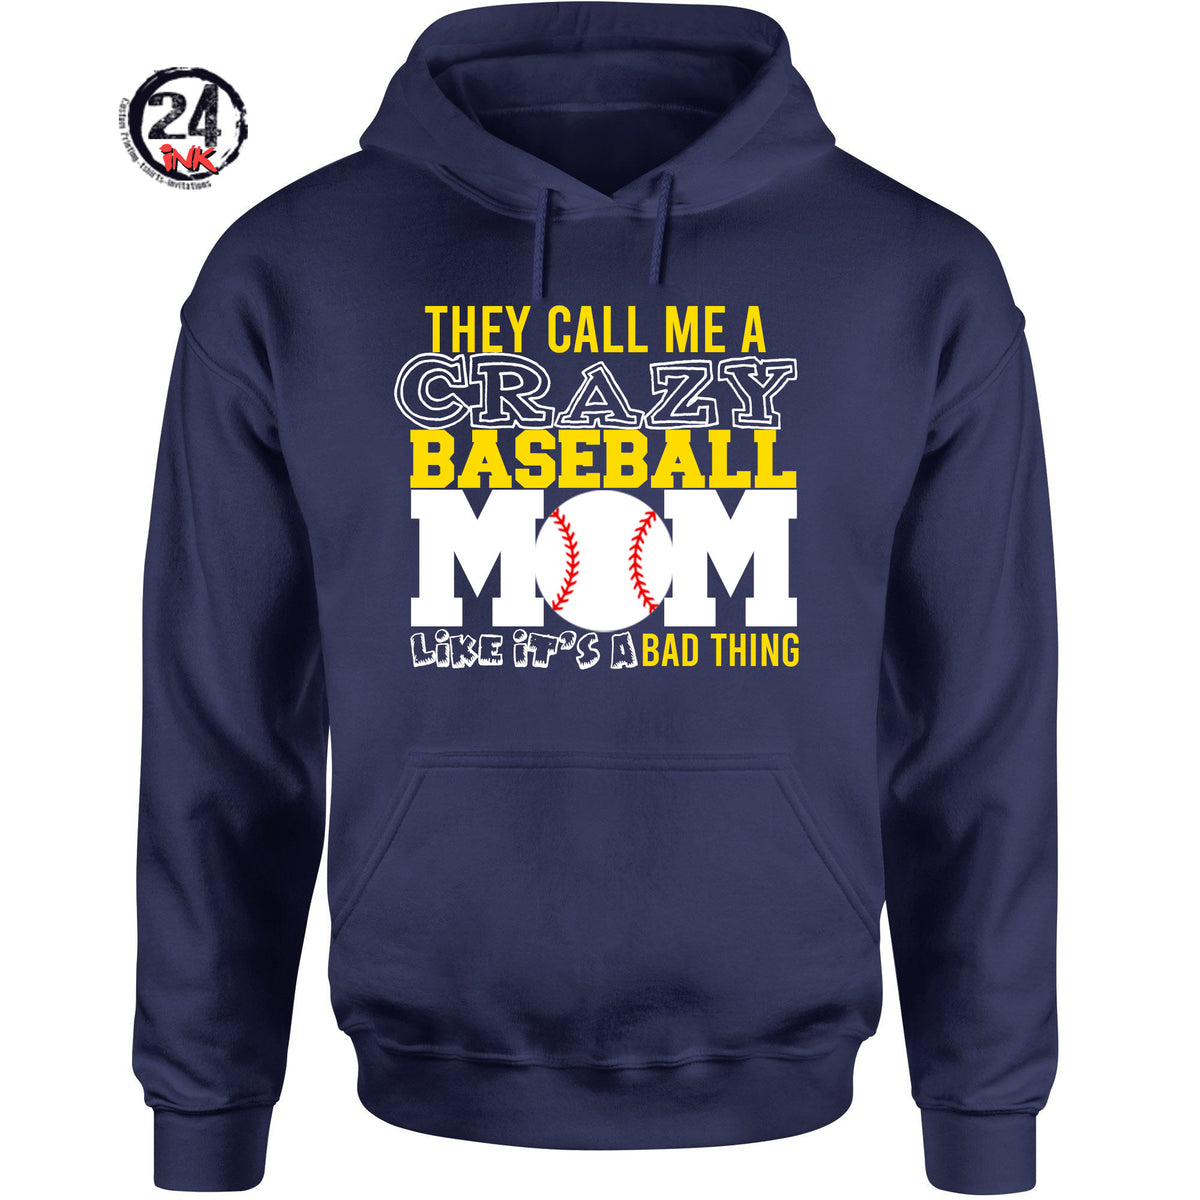 Crazy baseball mom sweatshirt